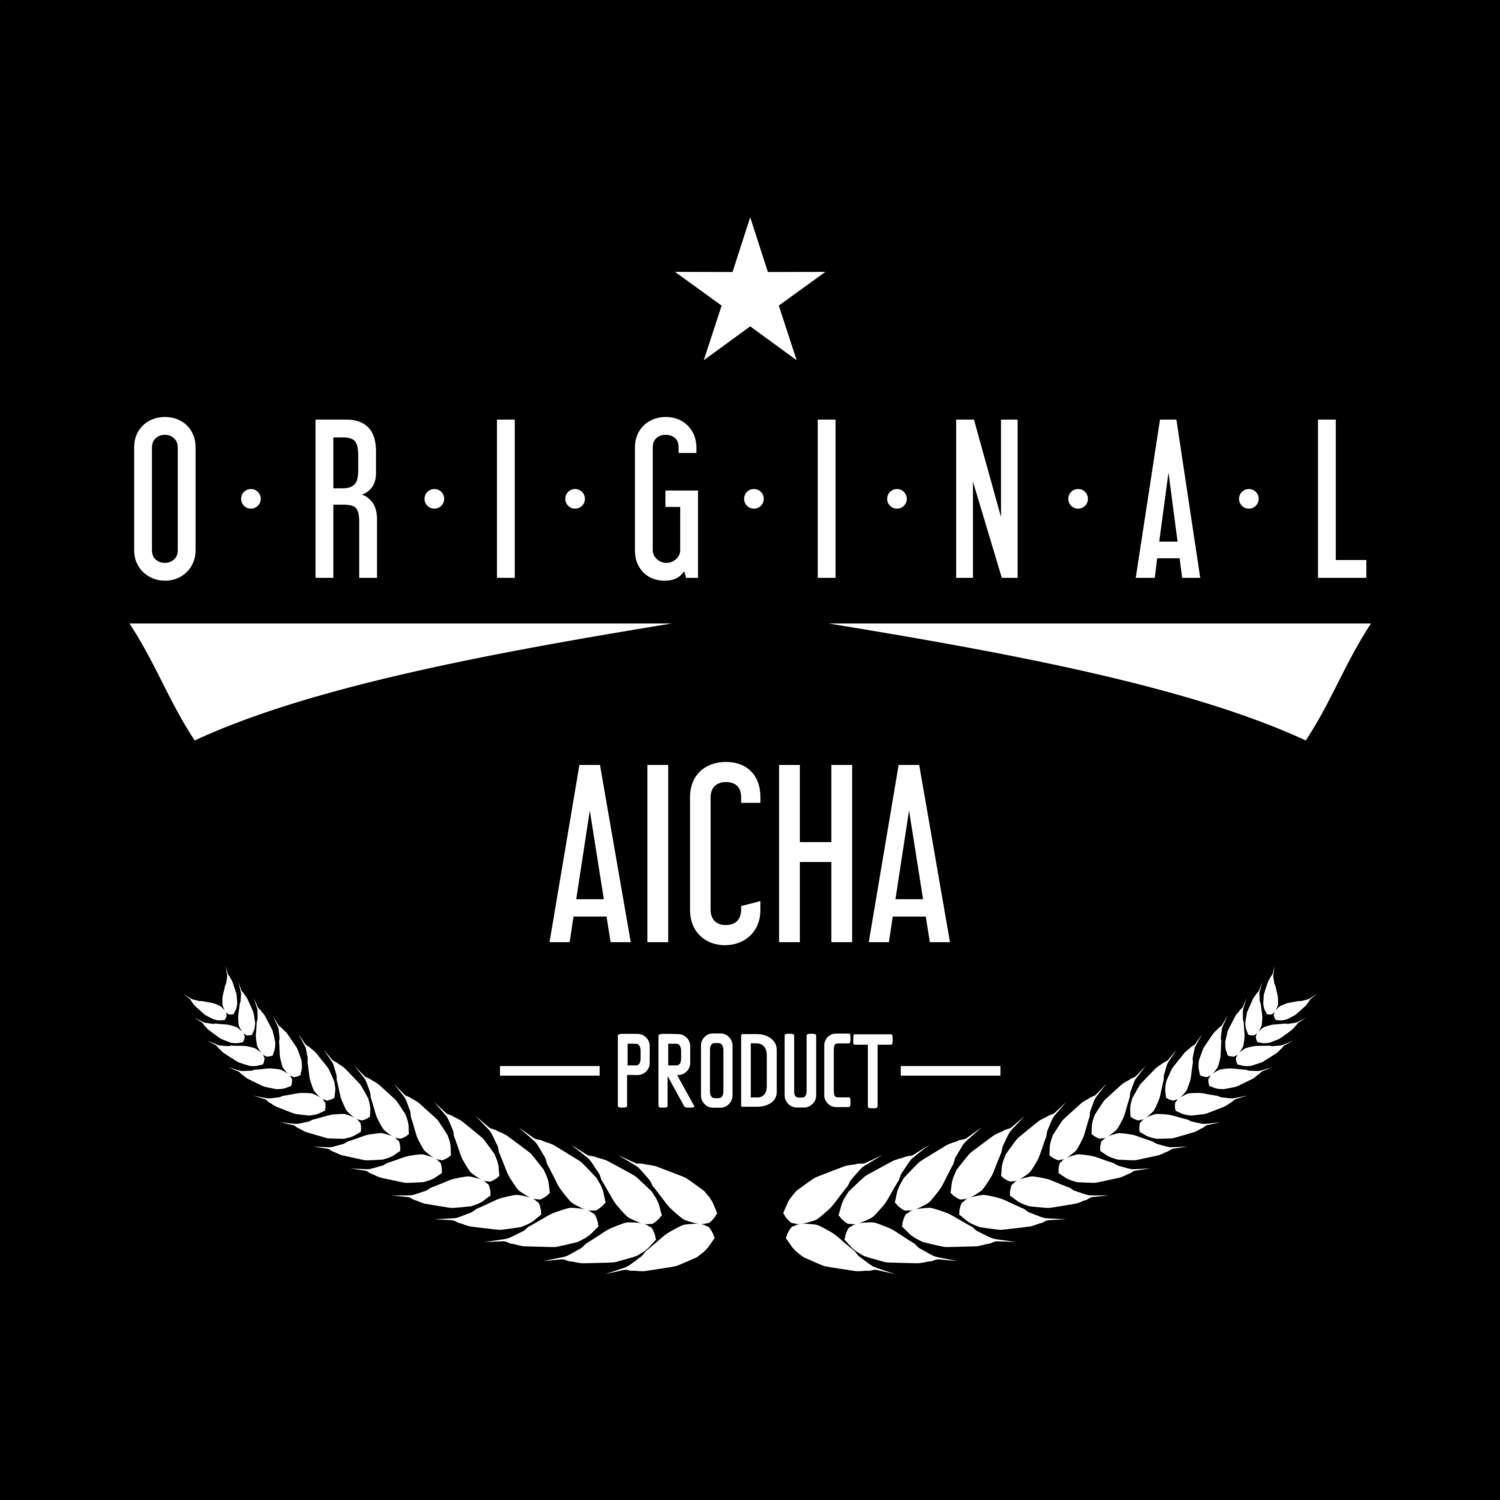 Aicha T-Shirt »Original Product«